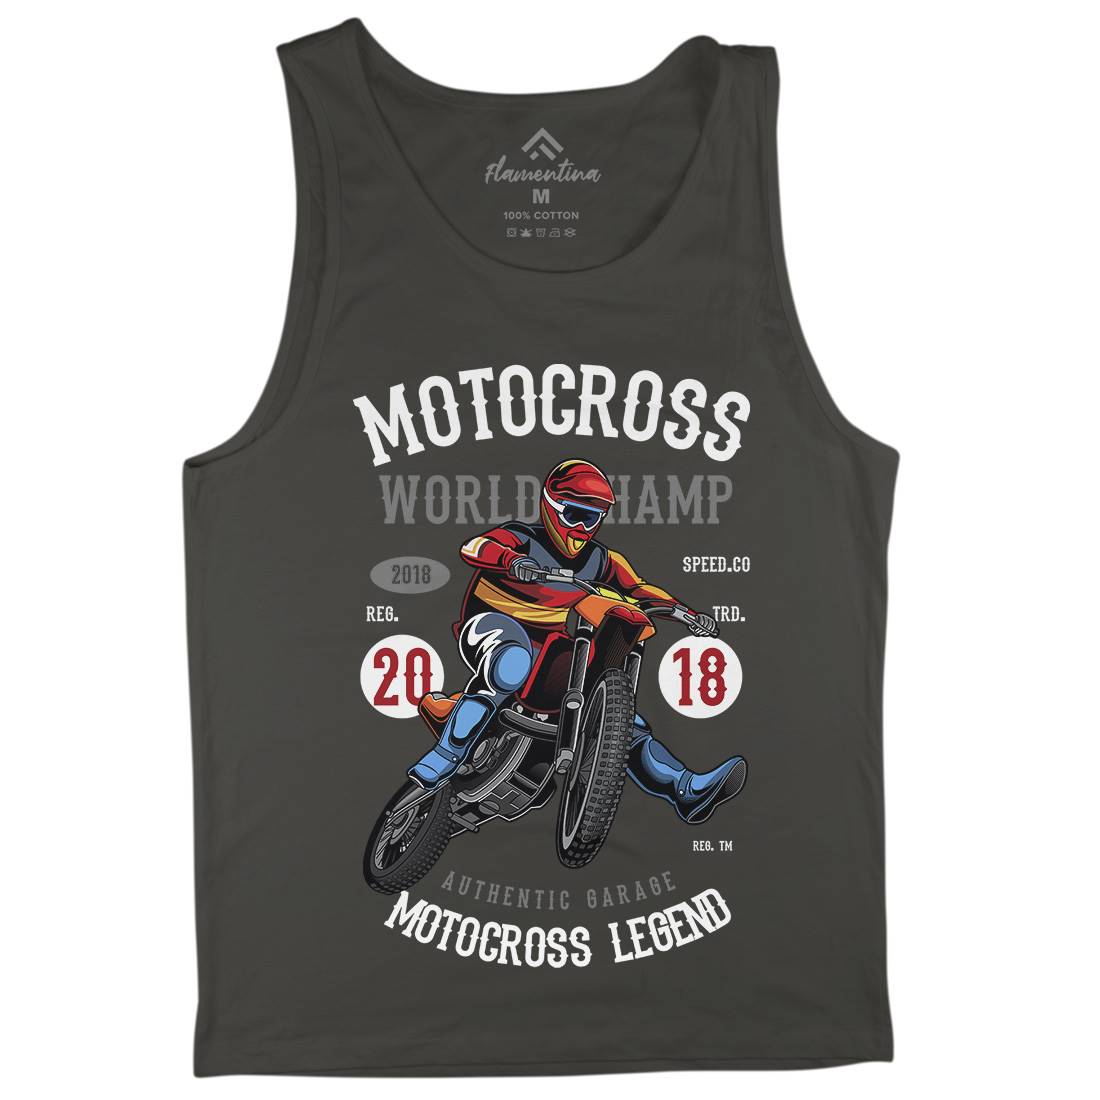 Motocross World Champ Mens Tank Top Vest Motorcycles C398